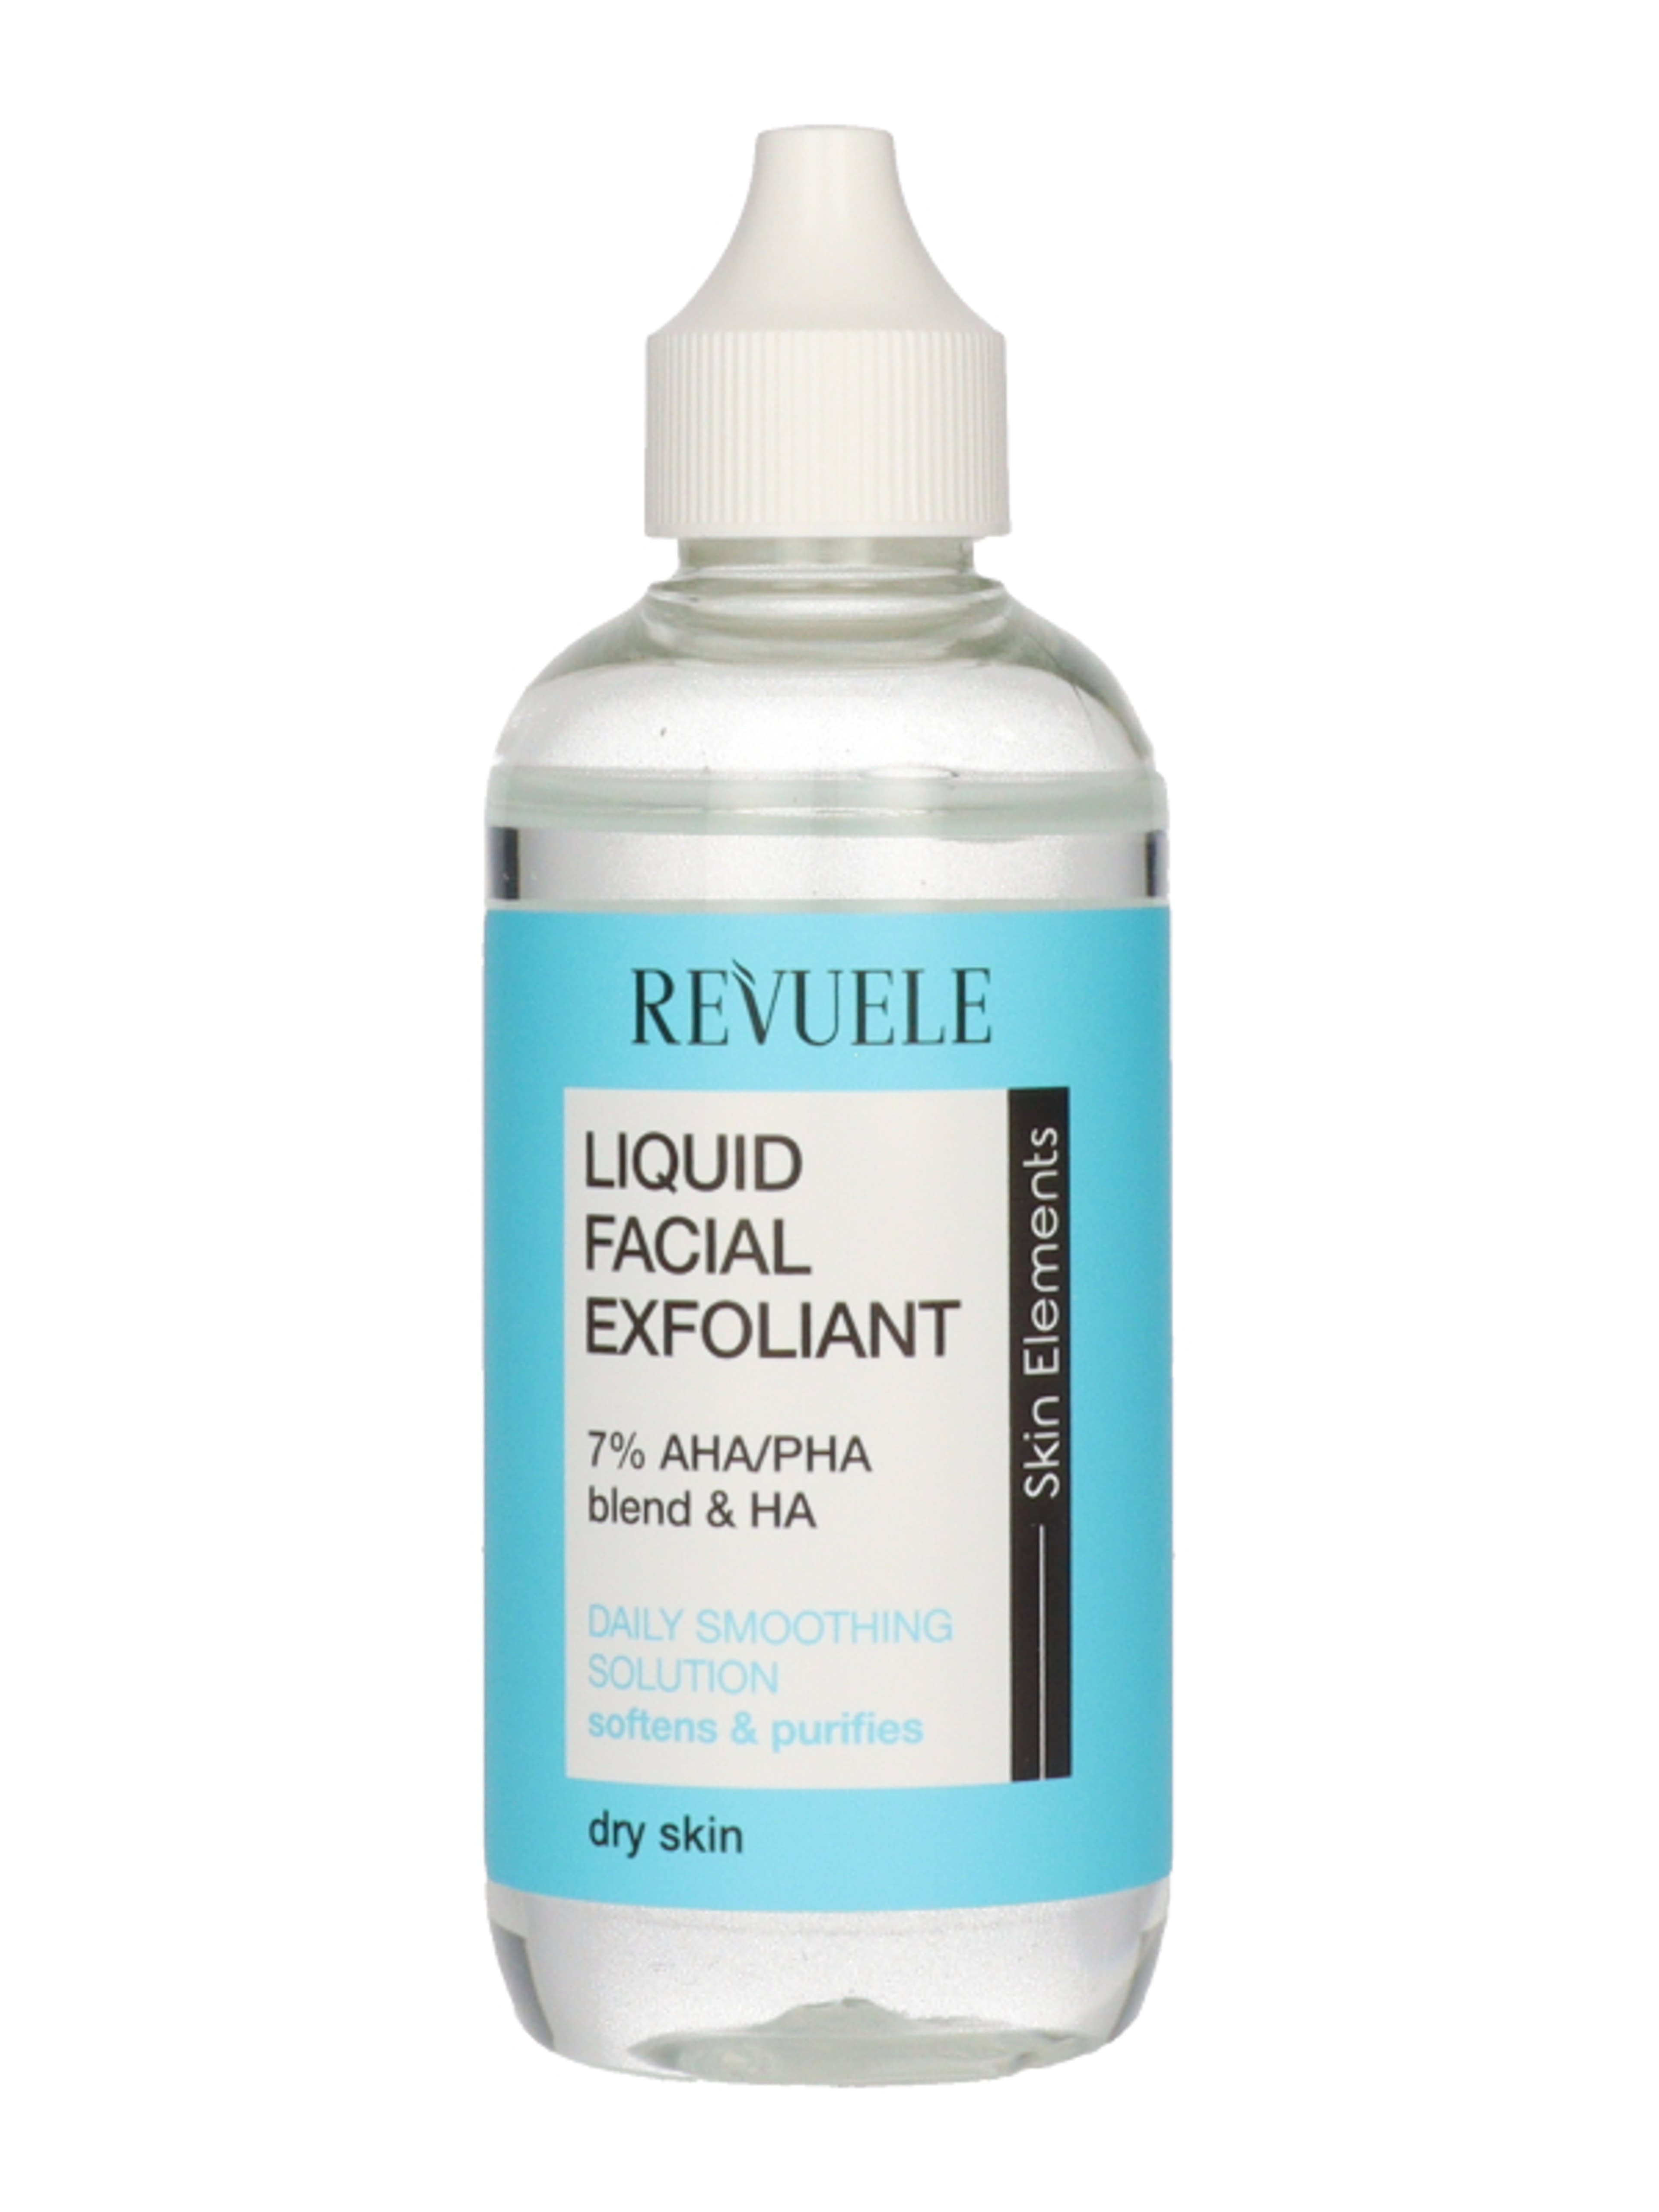 Revuele Facial Exfoliant 7%AHA/PHA Blend +HA Luquid hámlasztó - 125ml-3